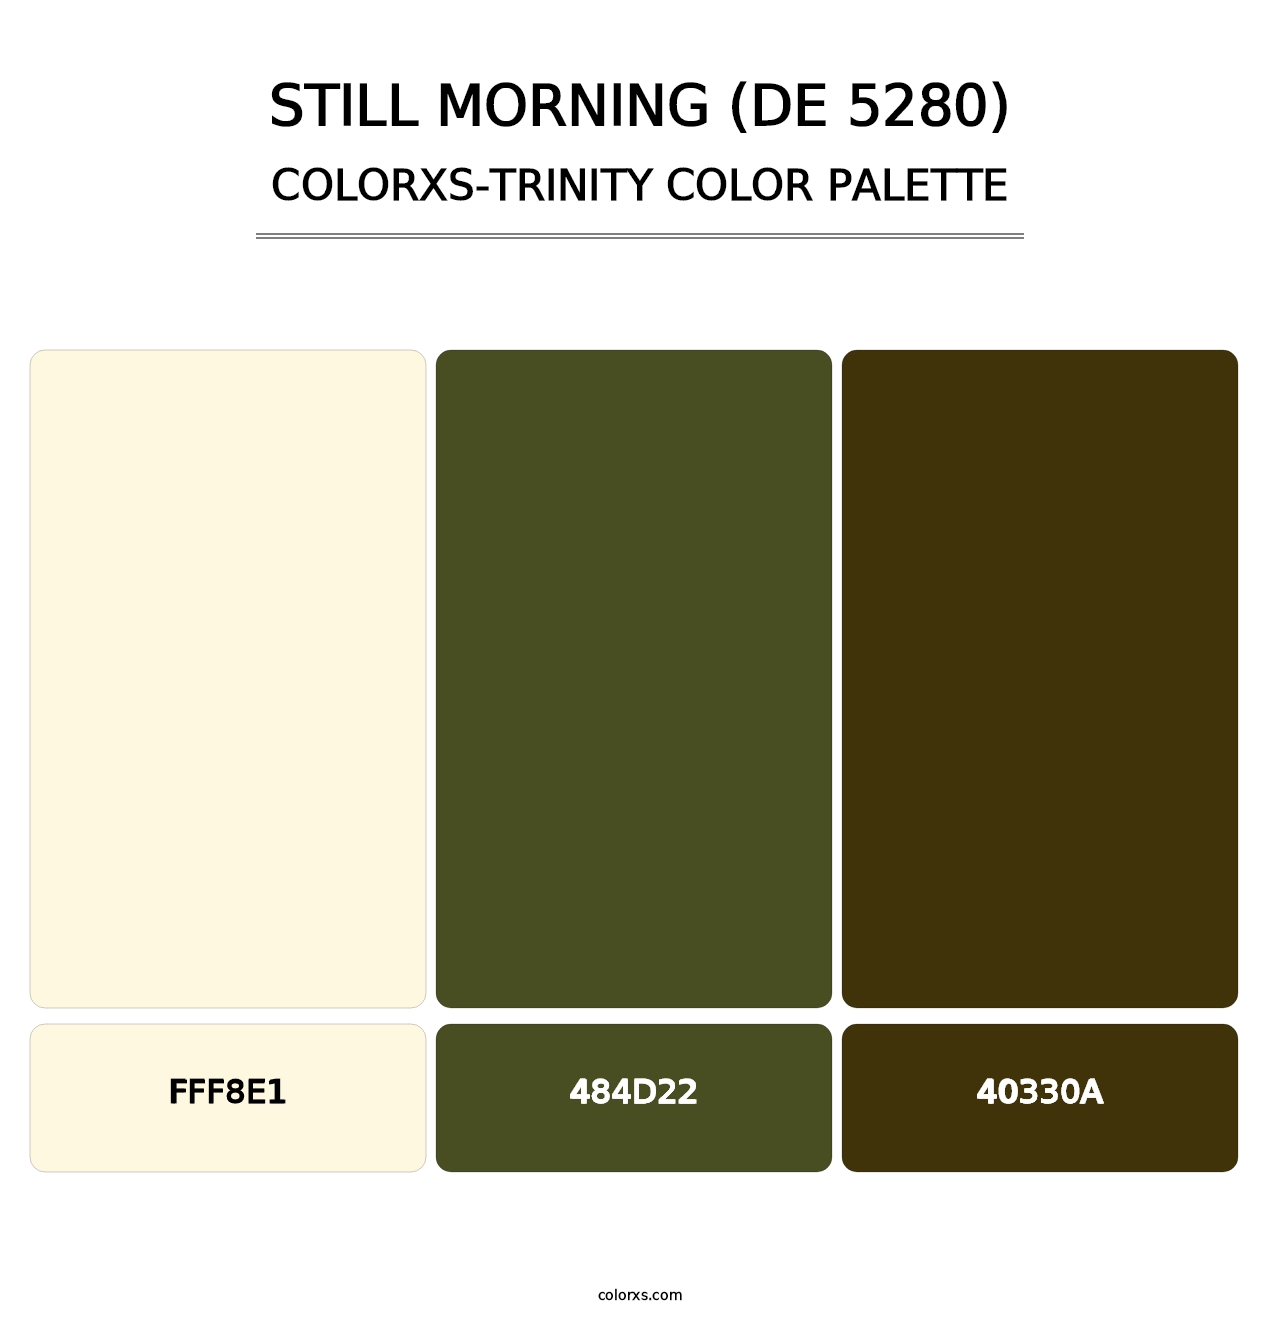 Still Morning (DE 5280) - Colorxs Trinity Palette